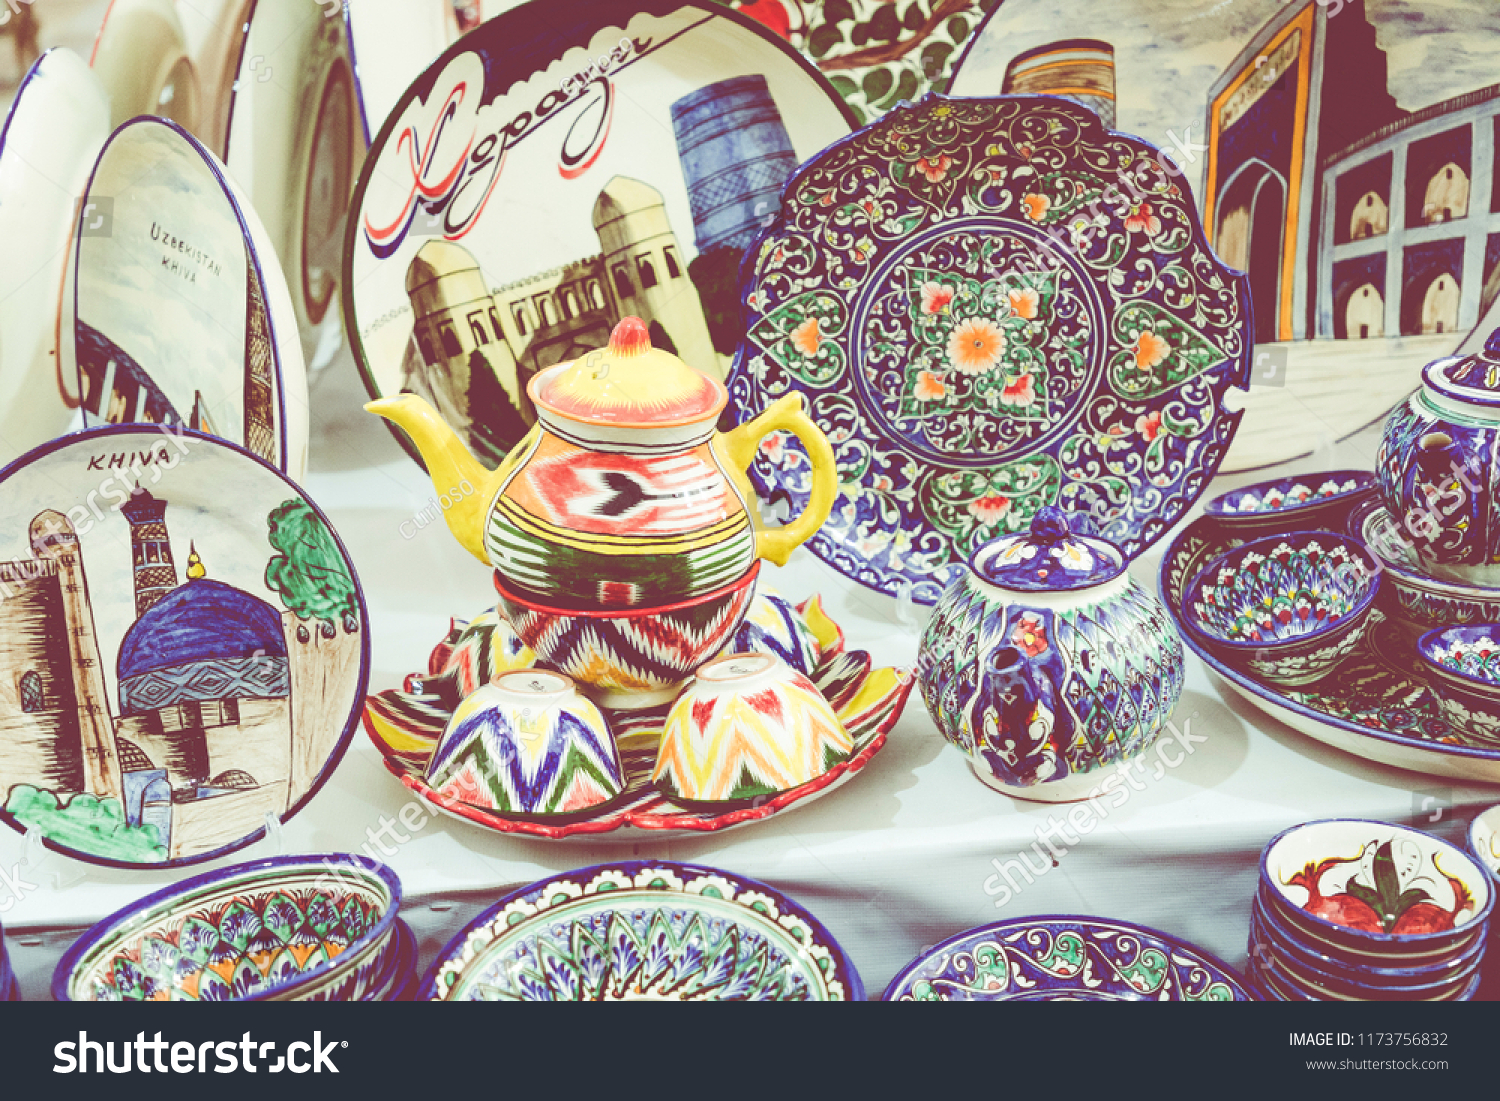 KHIVA, UZBEKISTAN - AUGUST 26, 2018: Plates and pots on a street market in the city of Khiva Uzbekistan. #1173756832